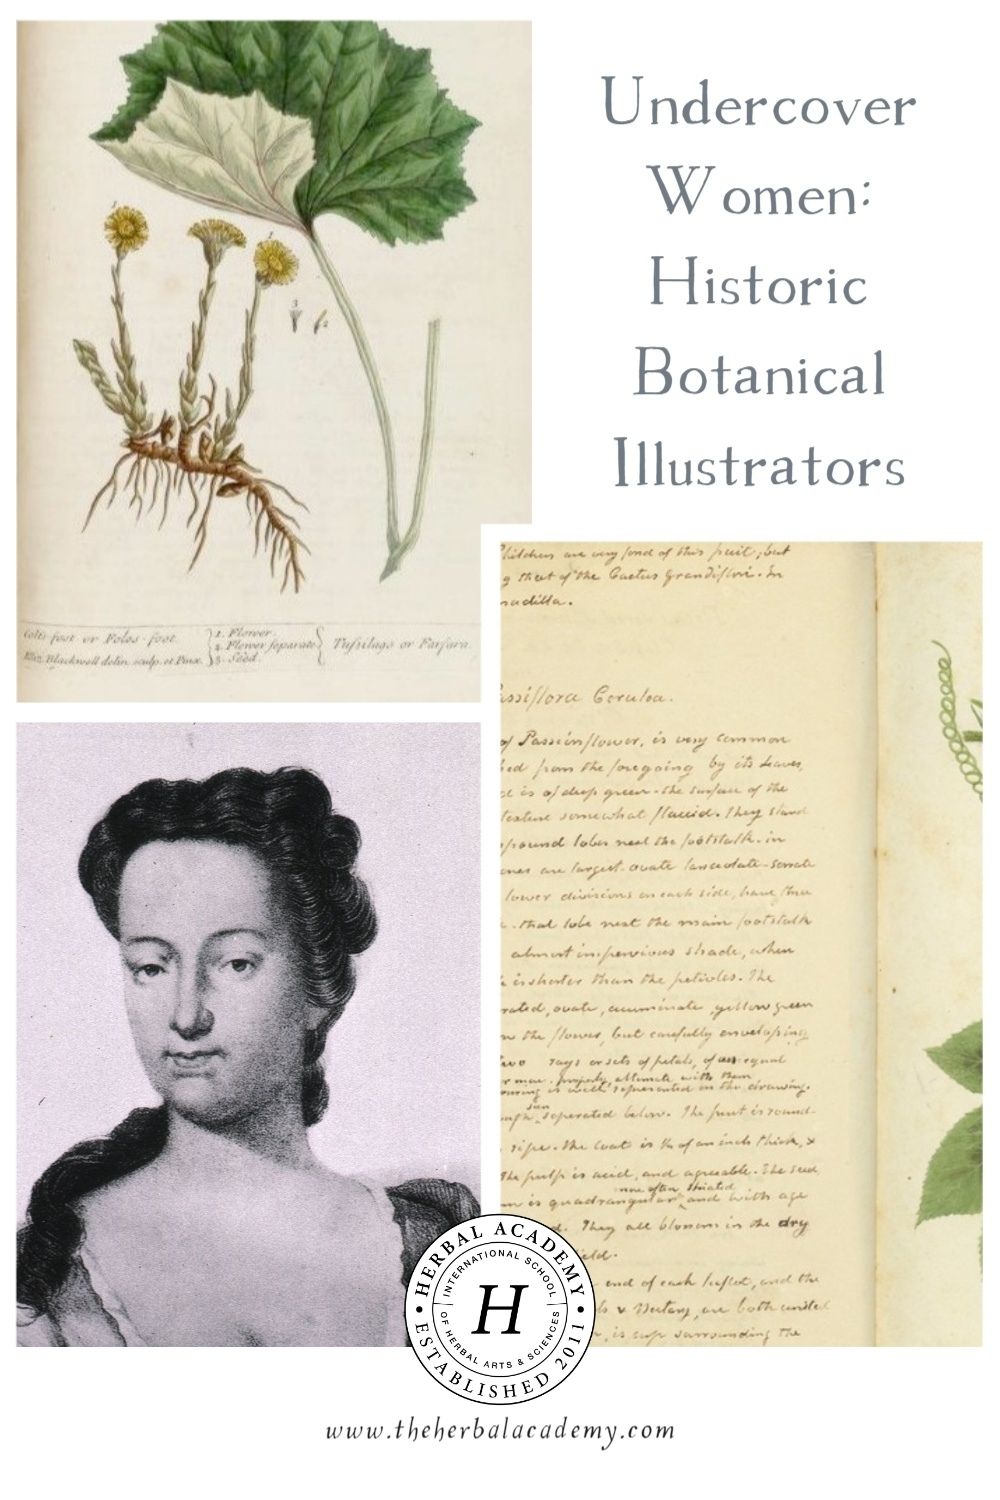 Undercover Women: Historic Botanical Illustrators | Herbal Academy | In celebration of International Women’s Day, here are a few historical women who made their mark as botanical illustrators.